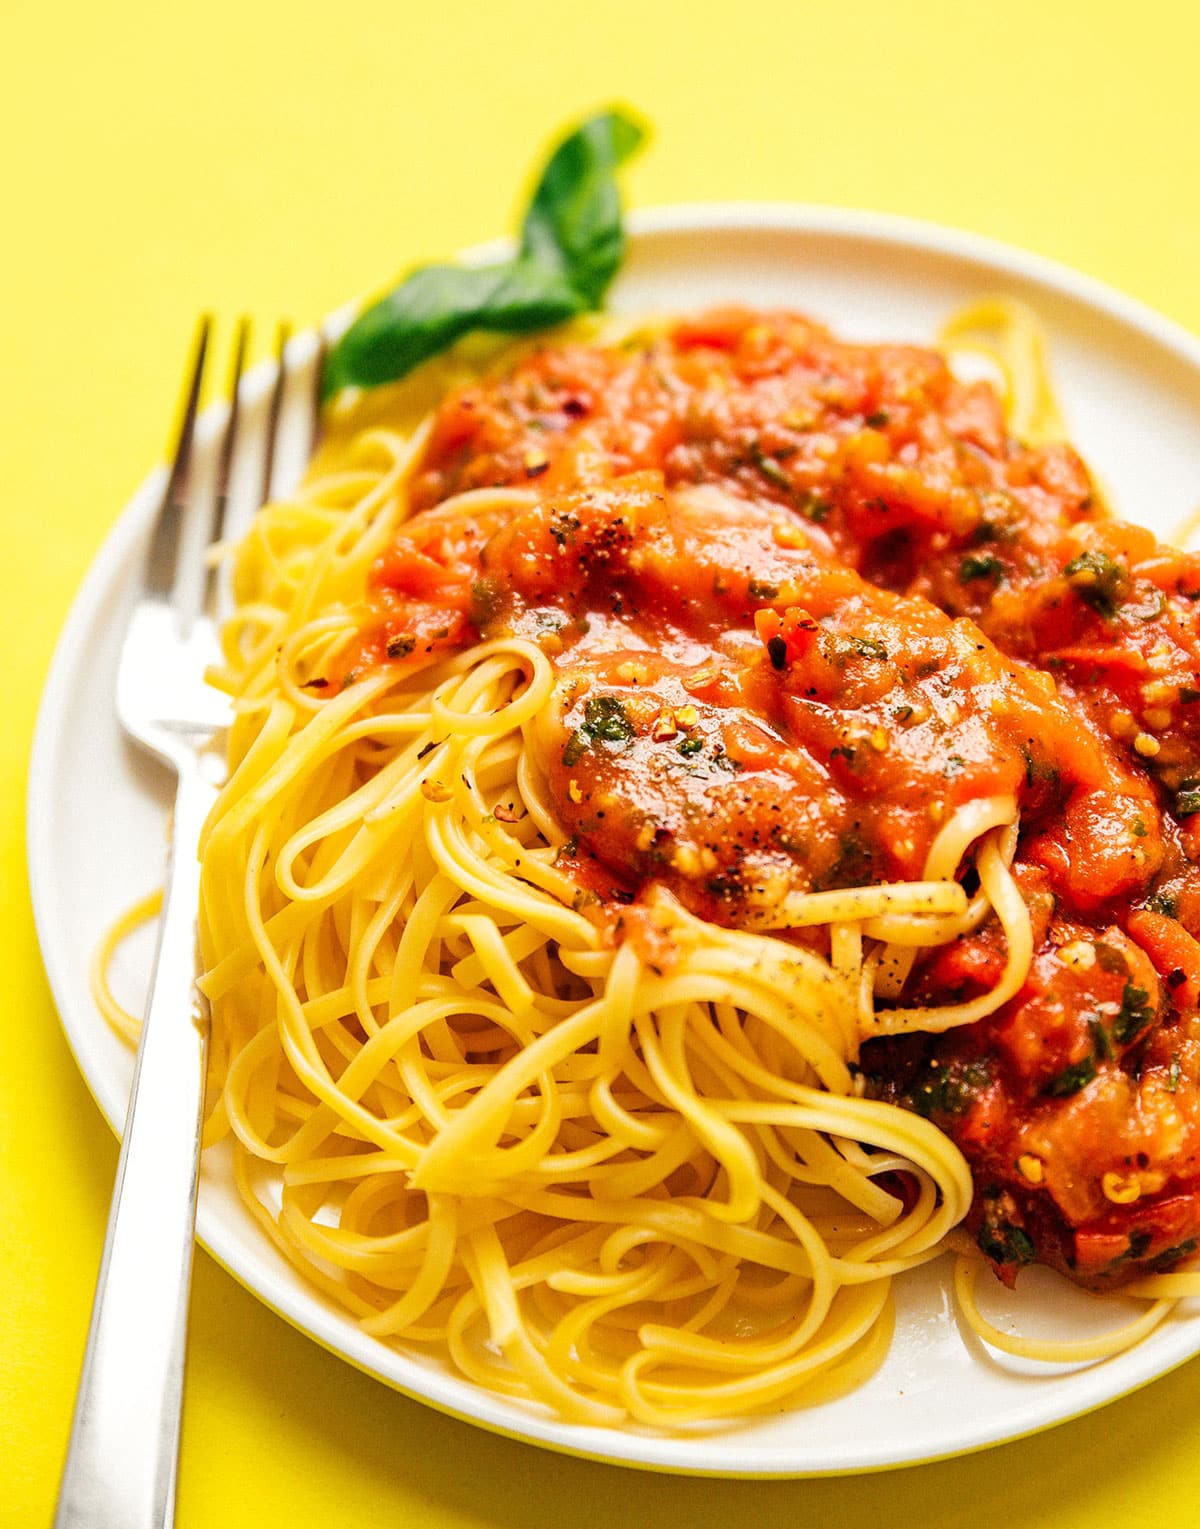 Homemade marinara sauce on a plate of spaghetti.